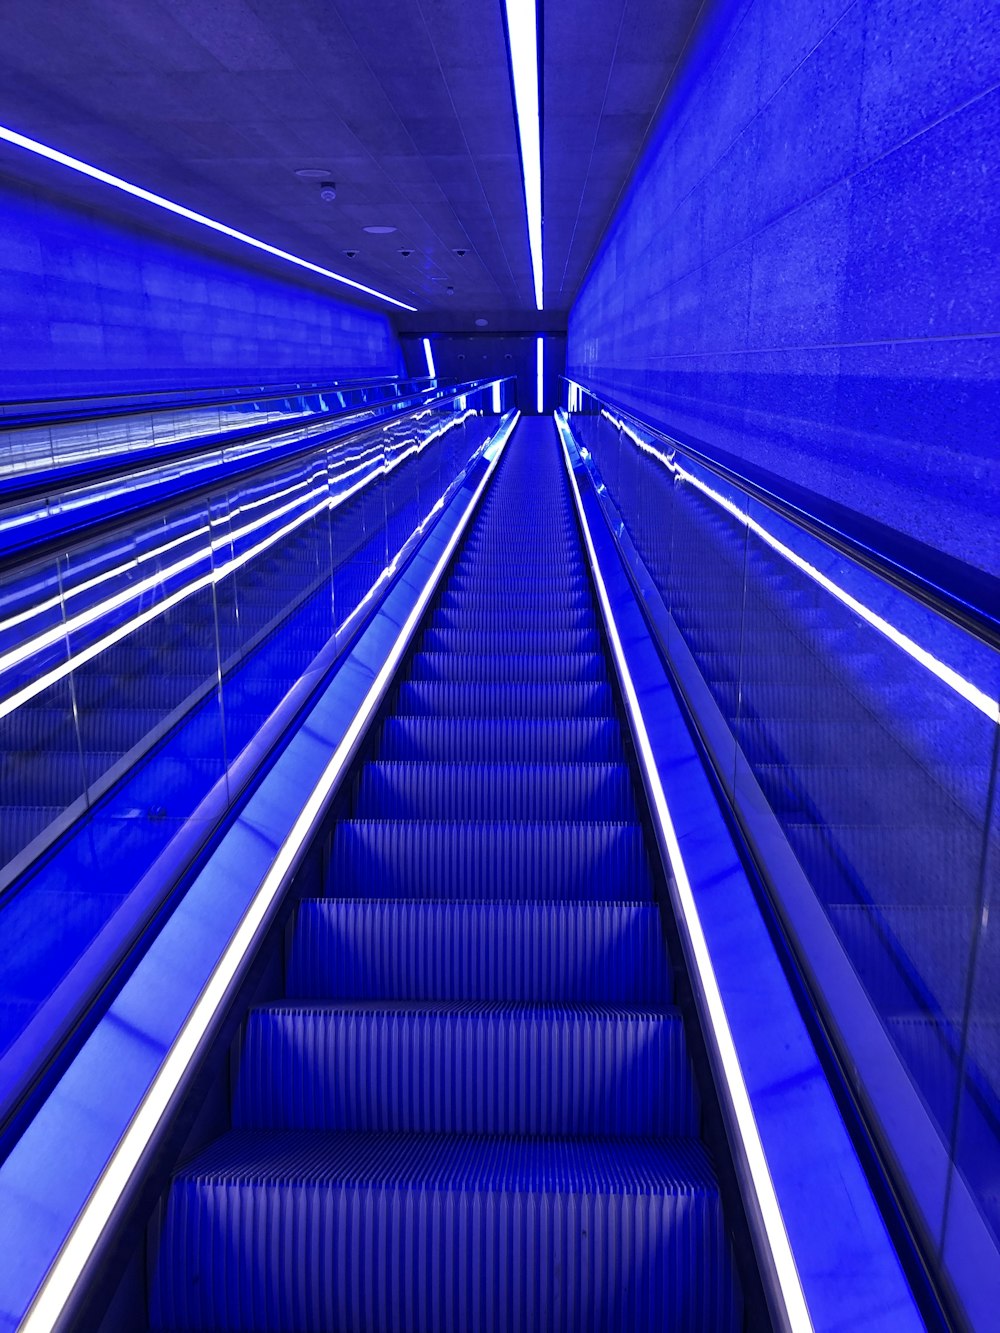 blue and white escalator in tunnel